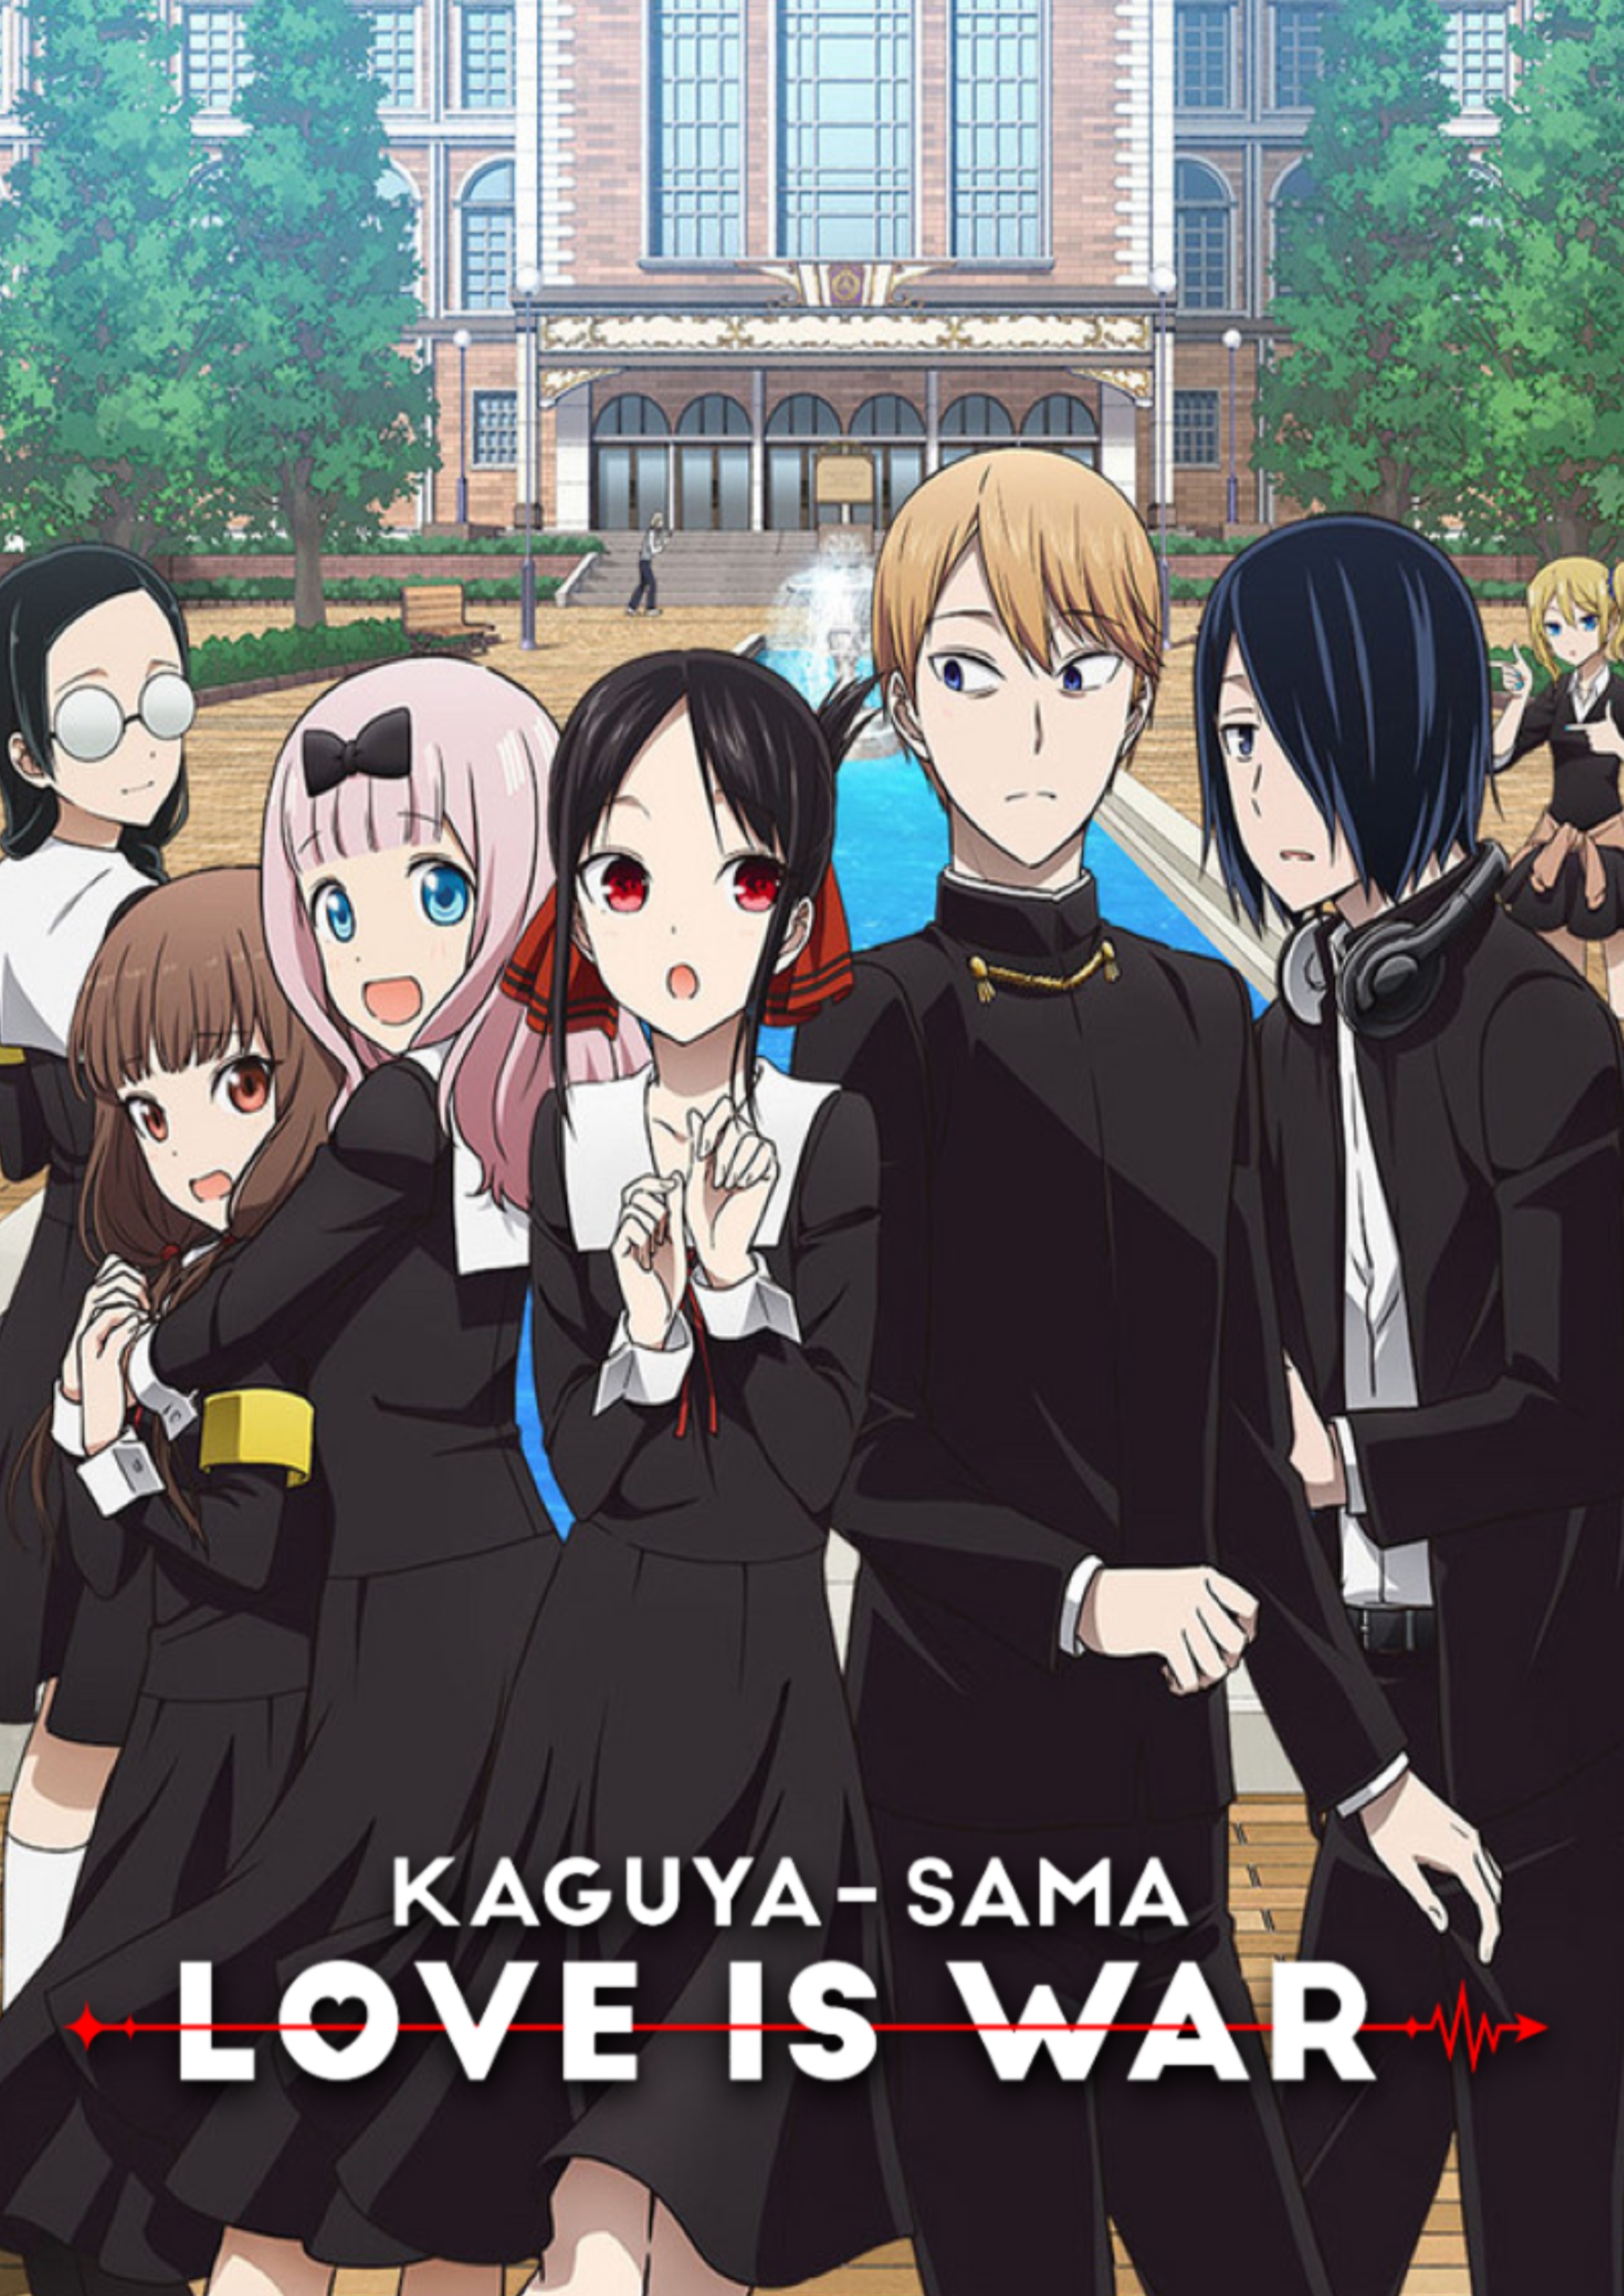 Kaguya Sama Season 2